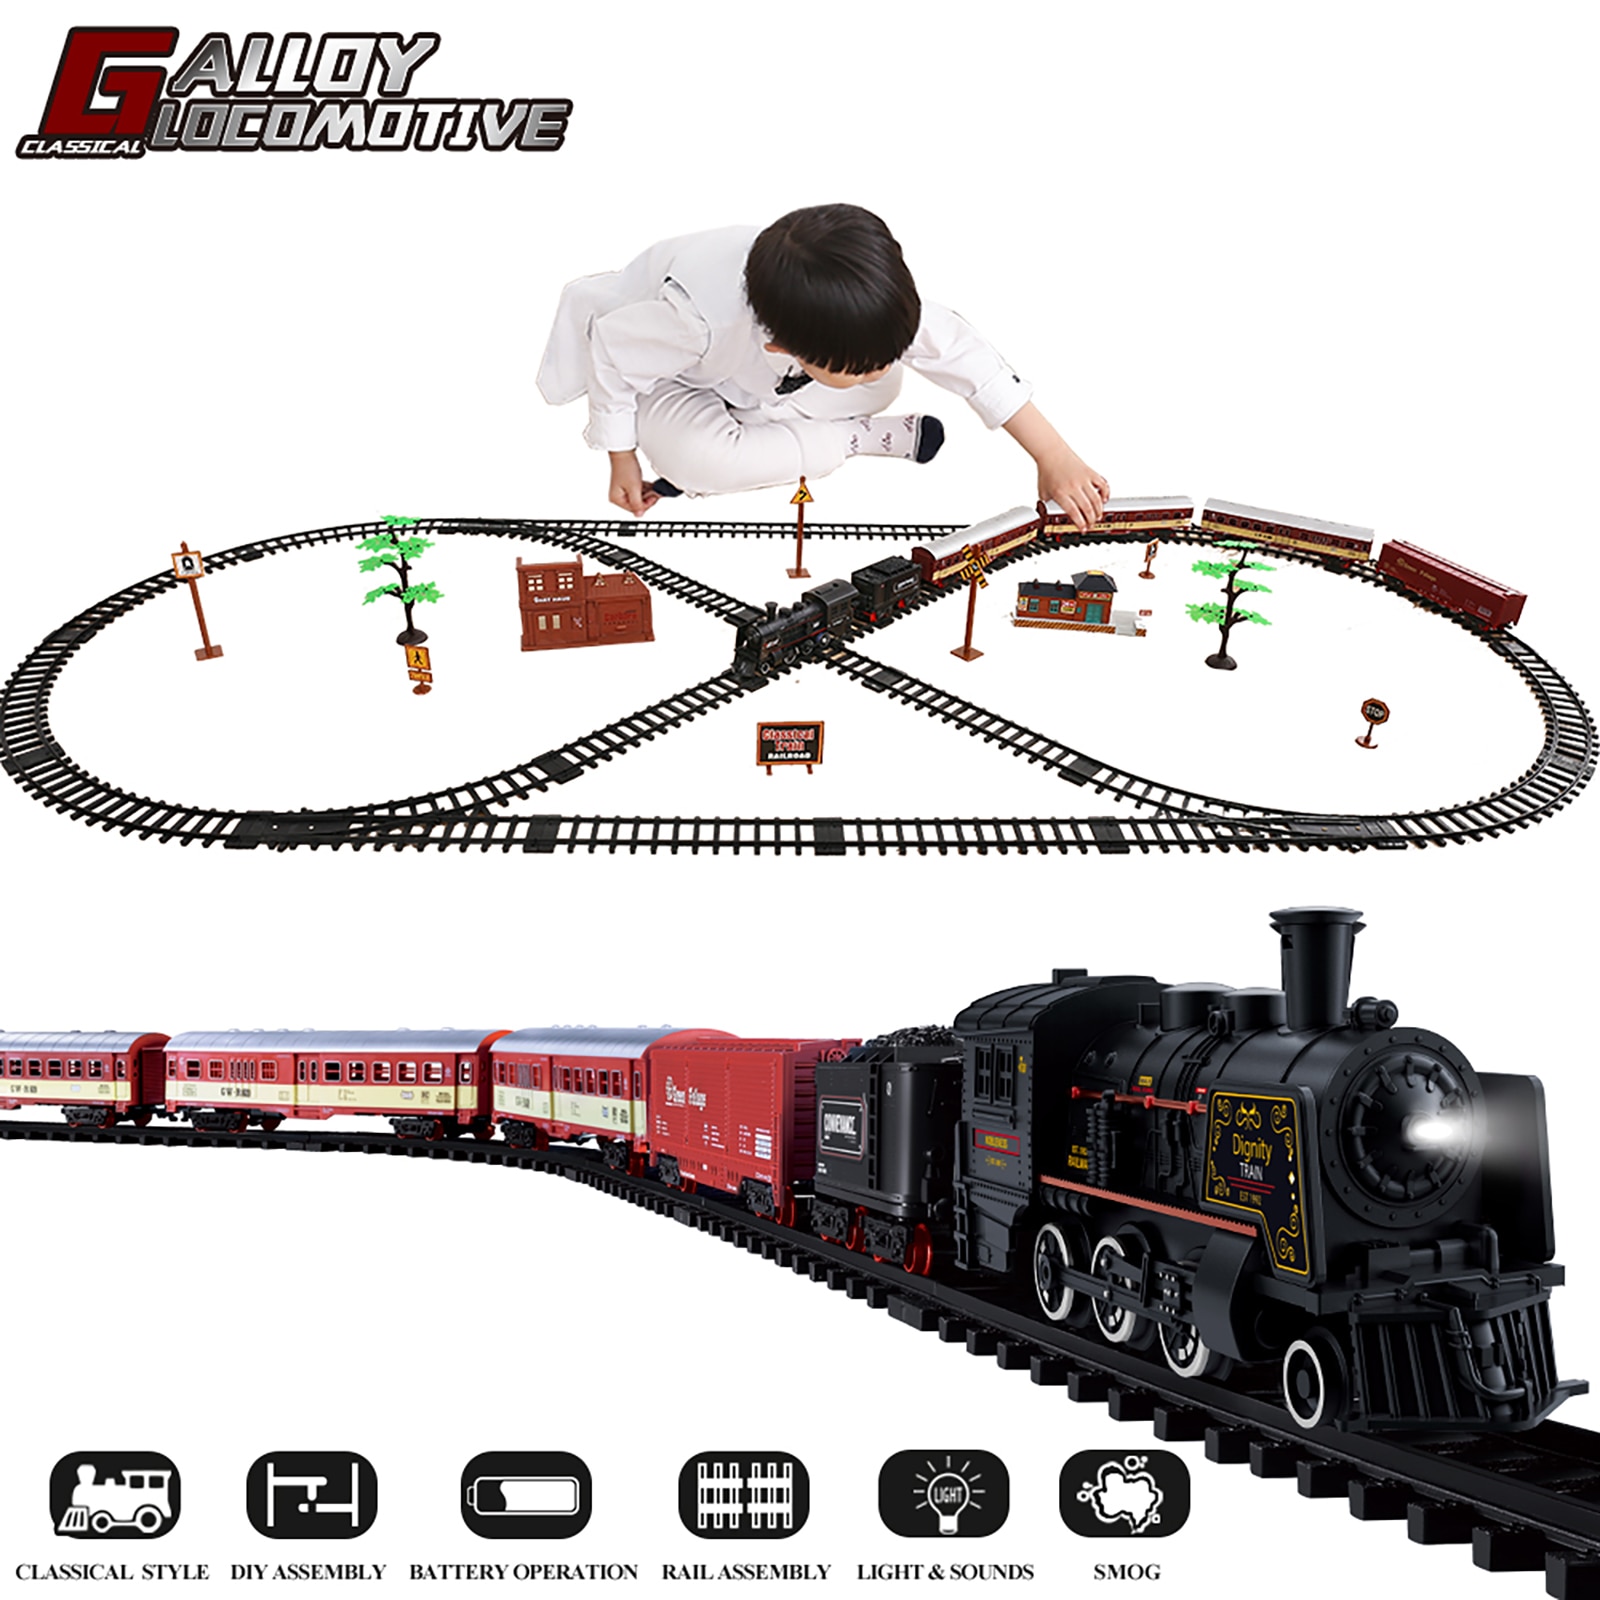 Electric-Christmas-Train-Toy-Set-Car-Railway-Tracks-Steam-Locomotive-Engine-Diecast-Model-Educational-Game-Boy.jpg